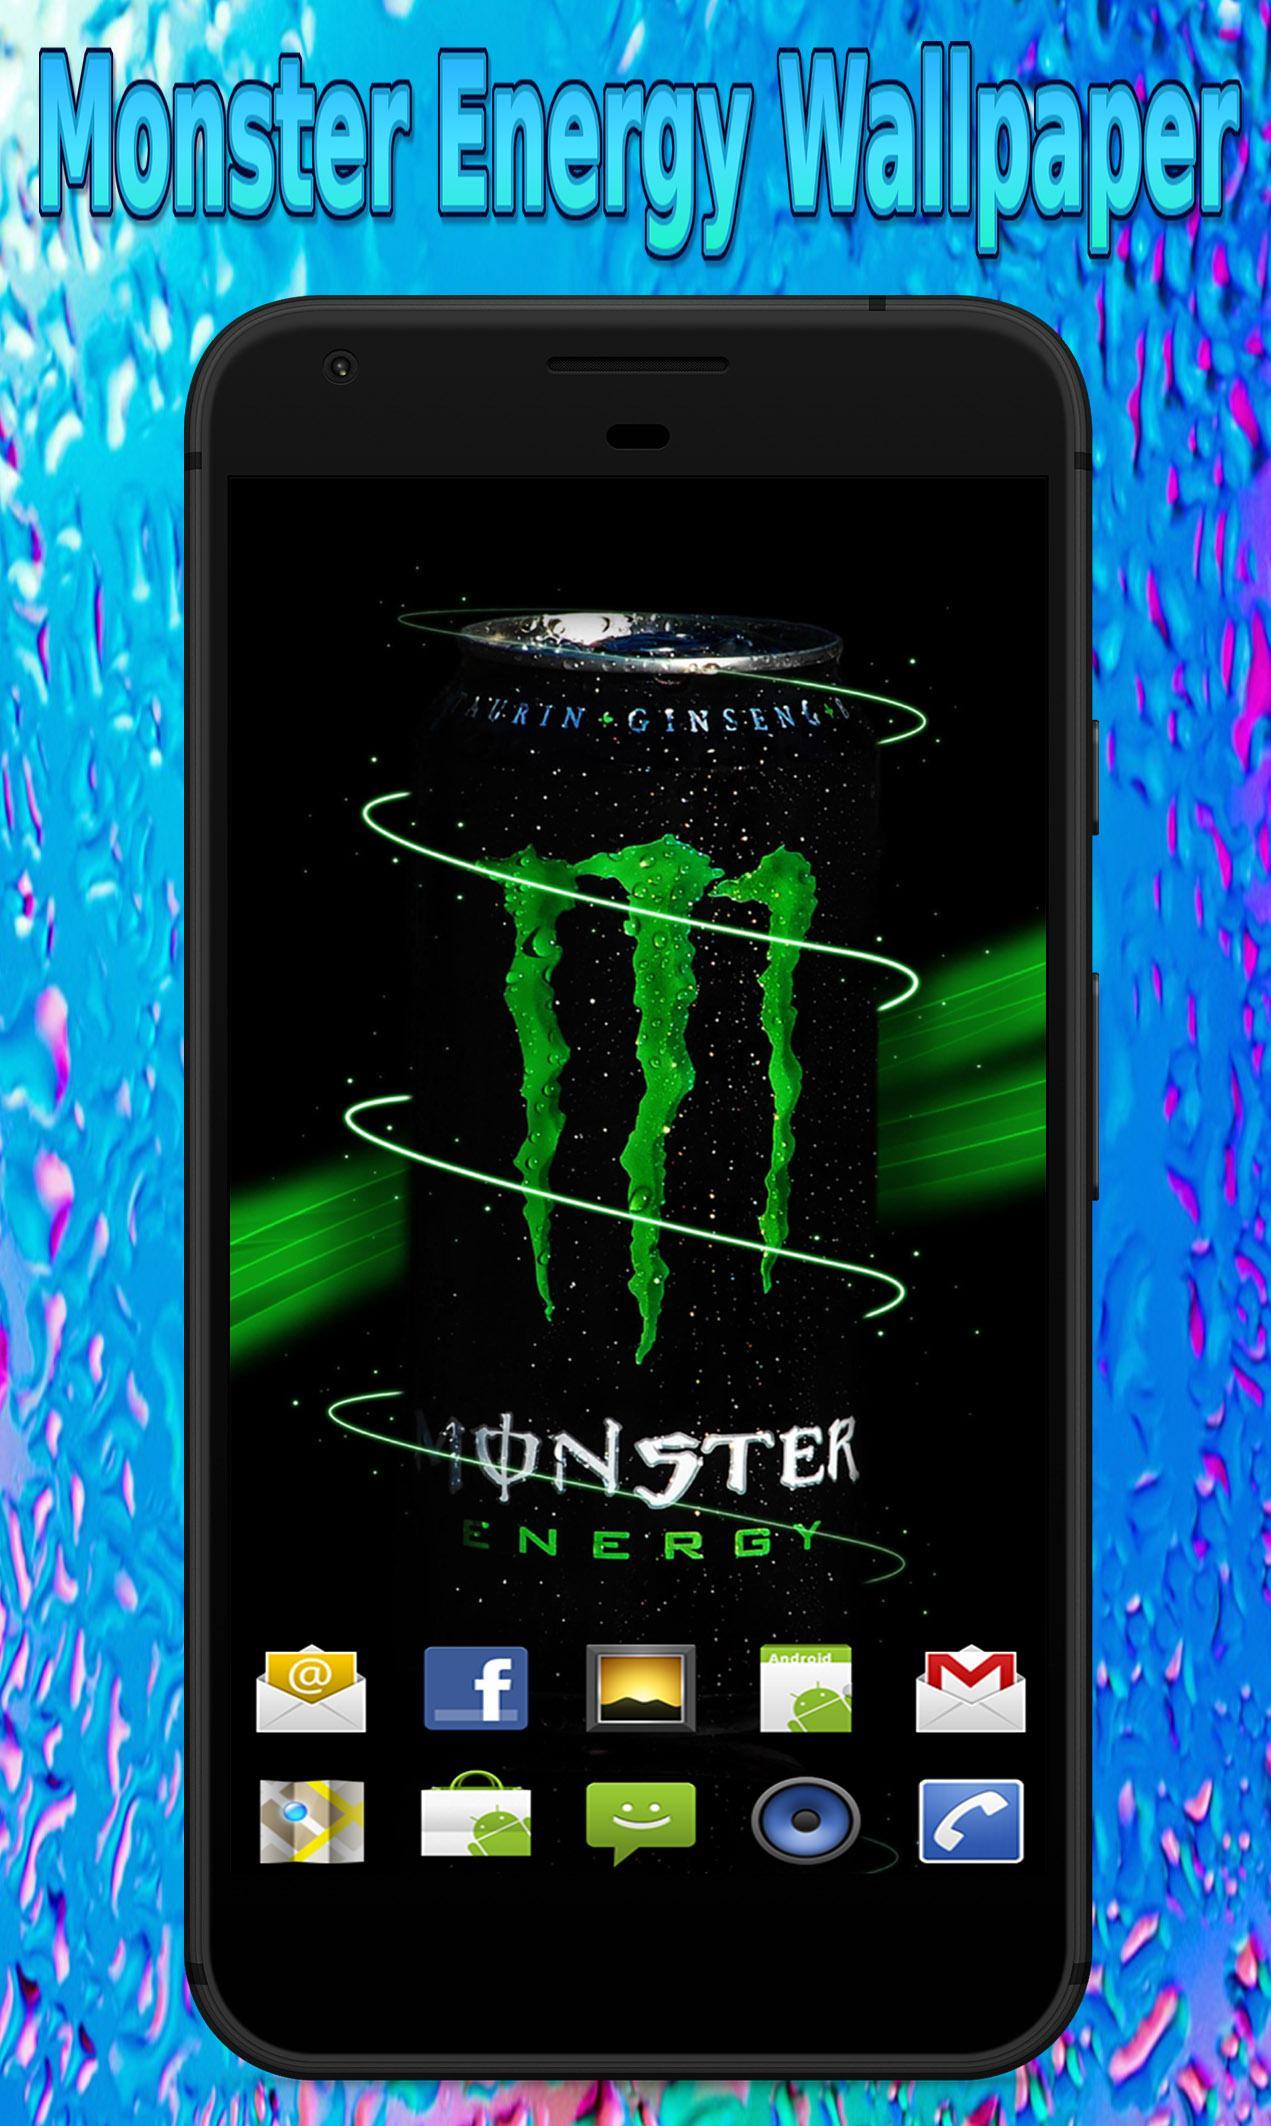 Android 用の Hd Monster Energy Wallpaper Apk をダウンロード